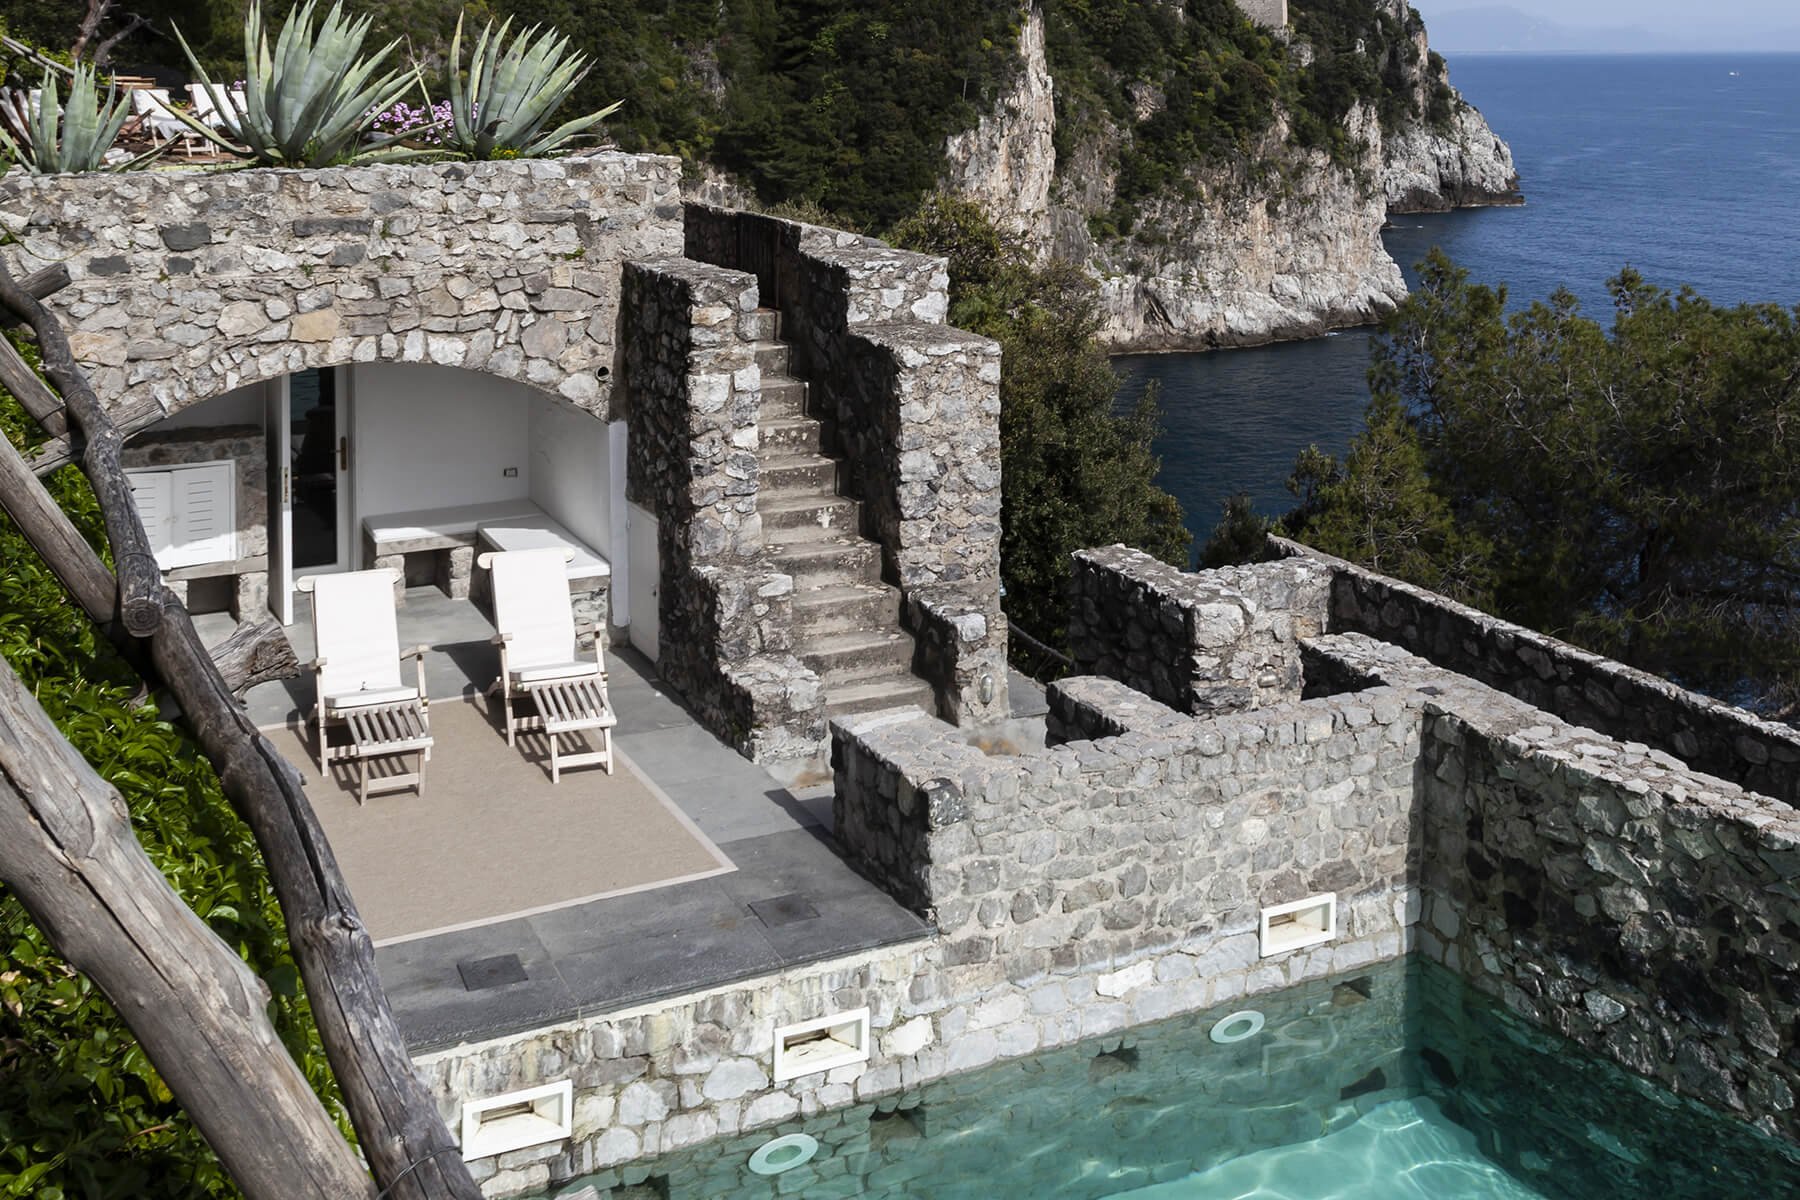 Francis York Fully Catered Luxury Villa Rental on the Amalfi Coast 20.jpg